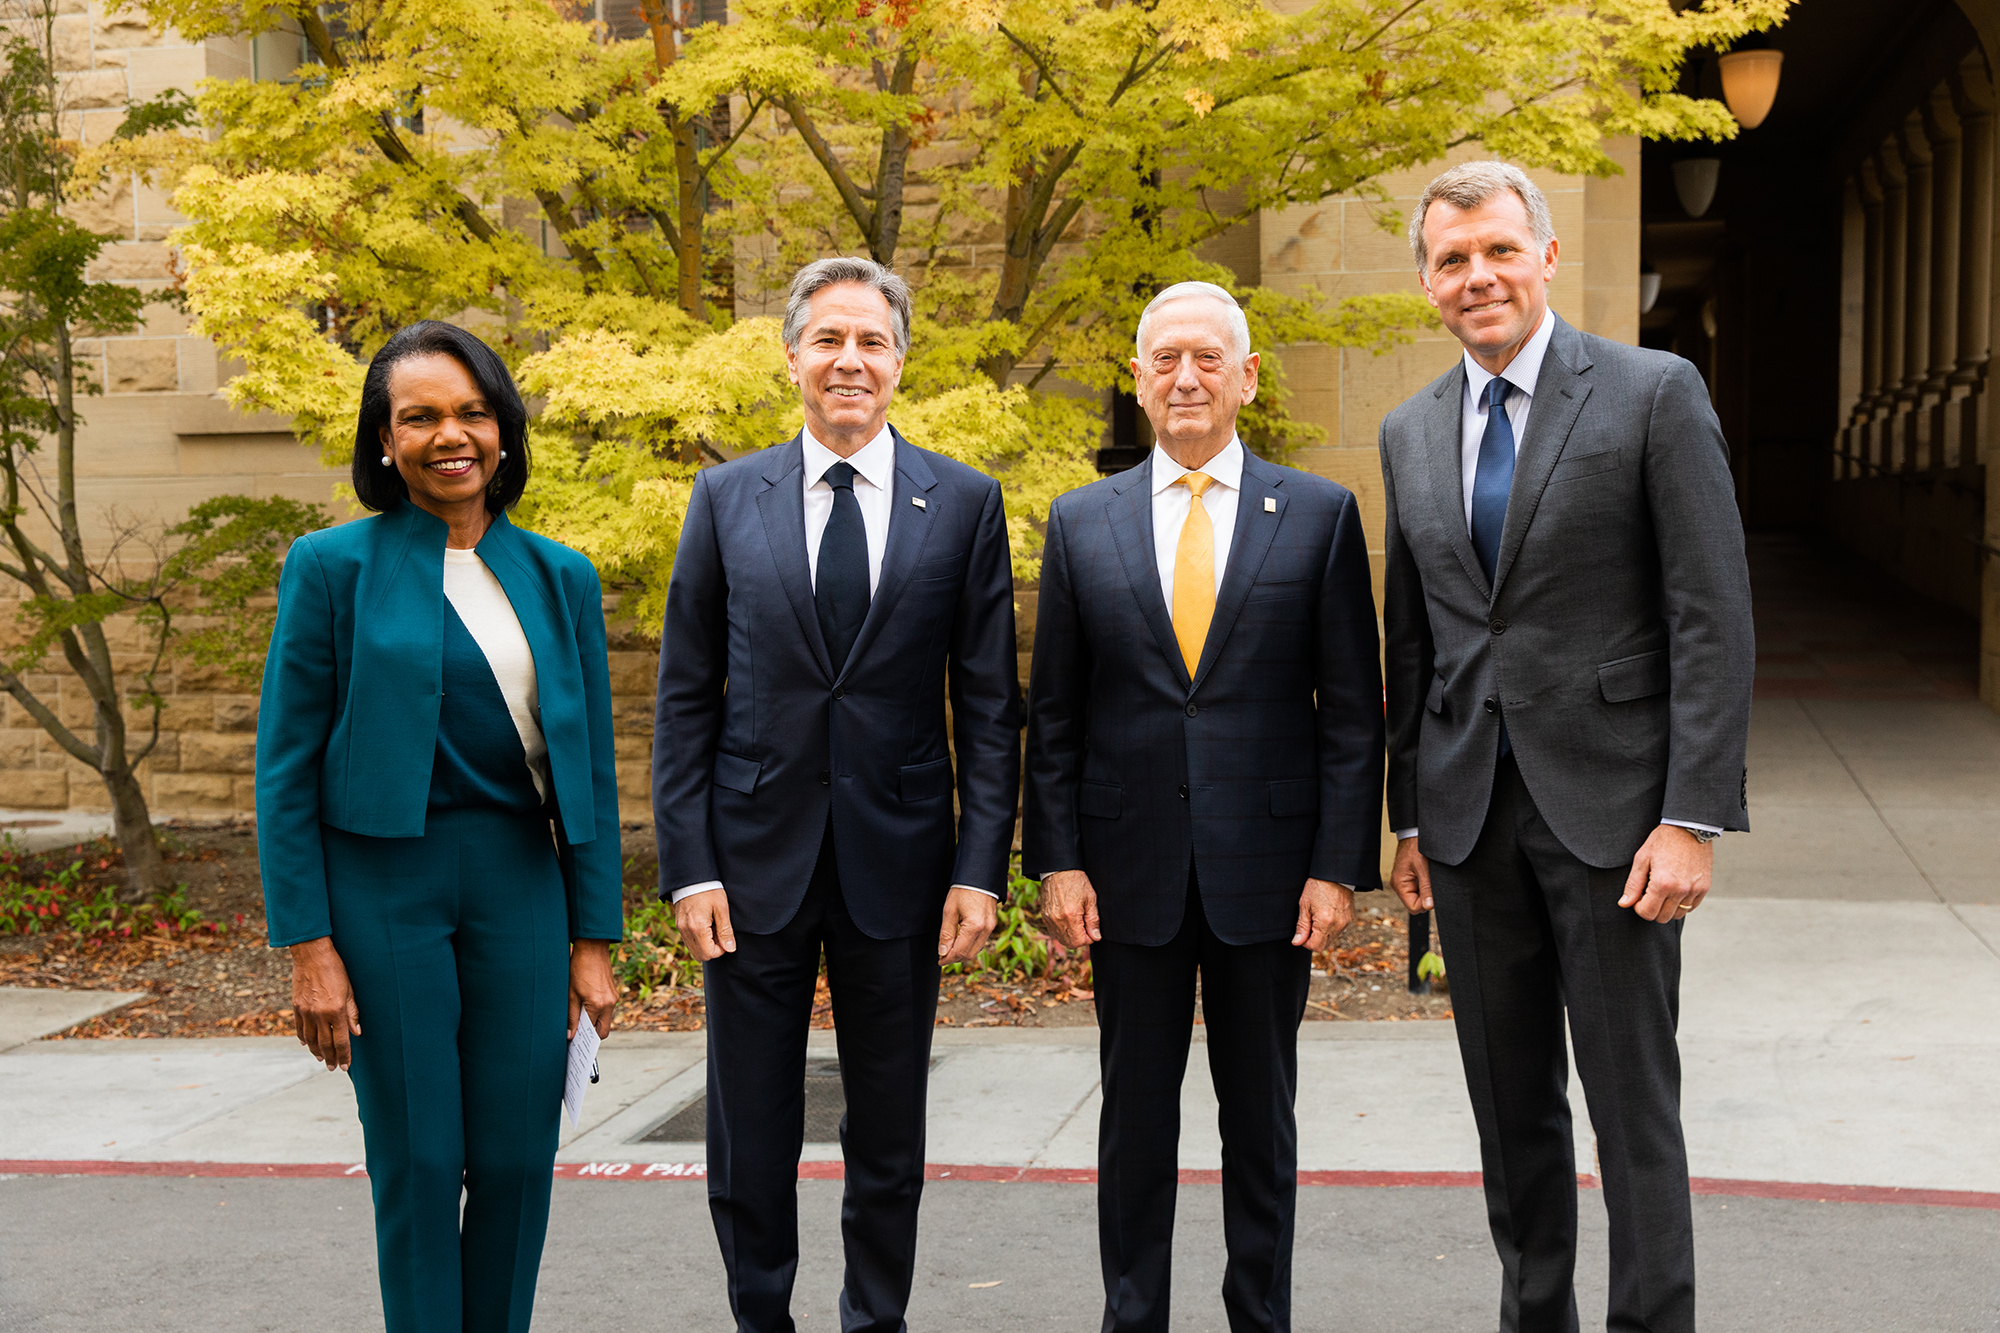 Condoleezza Rice, Antony Blinken, James Mattis, and Nathaniel Fick